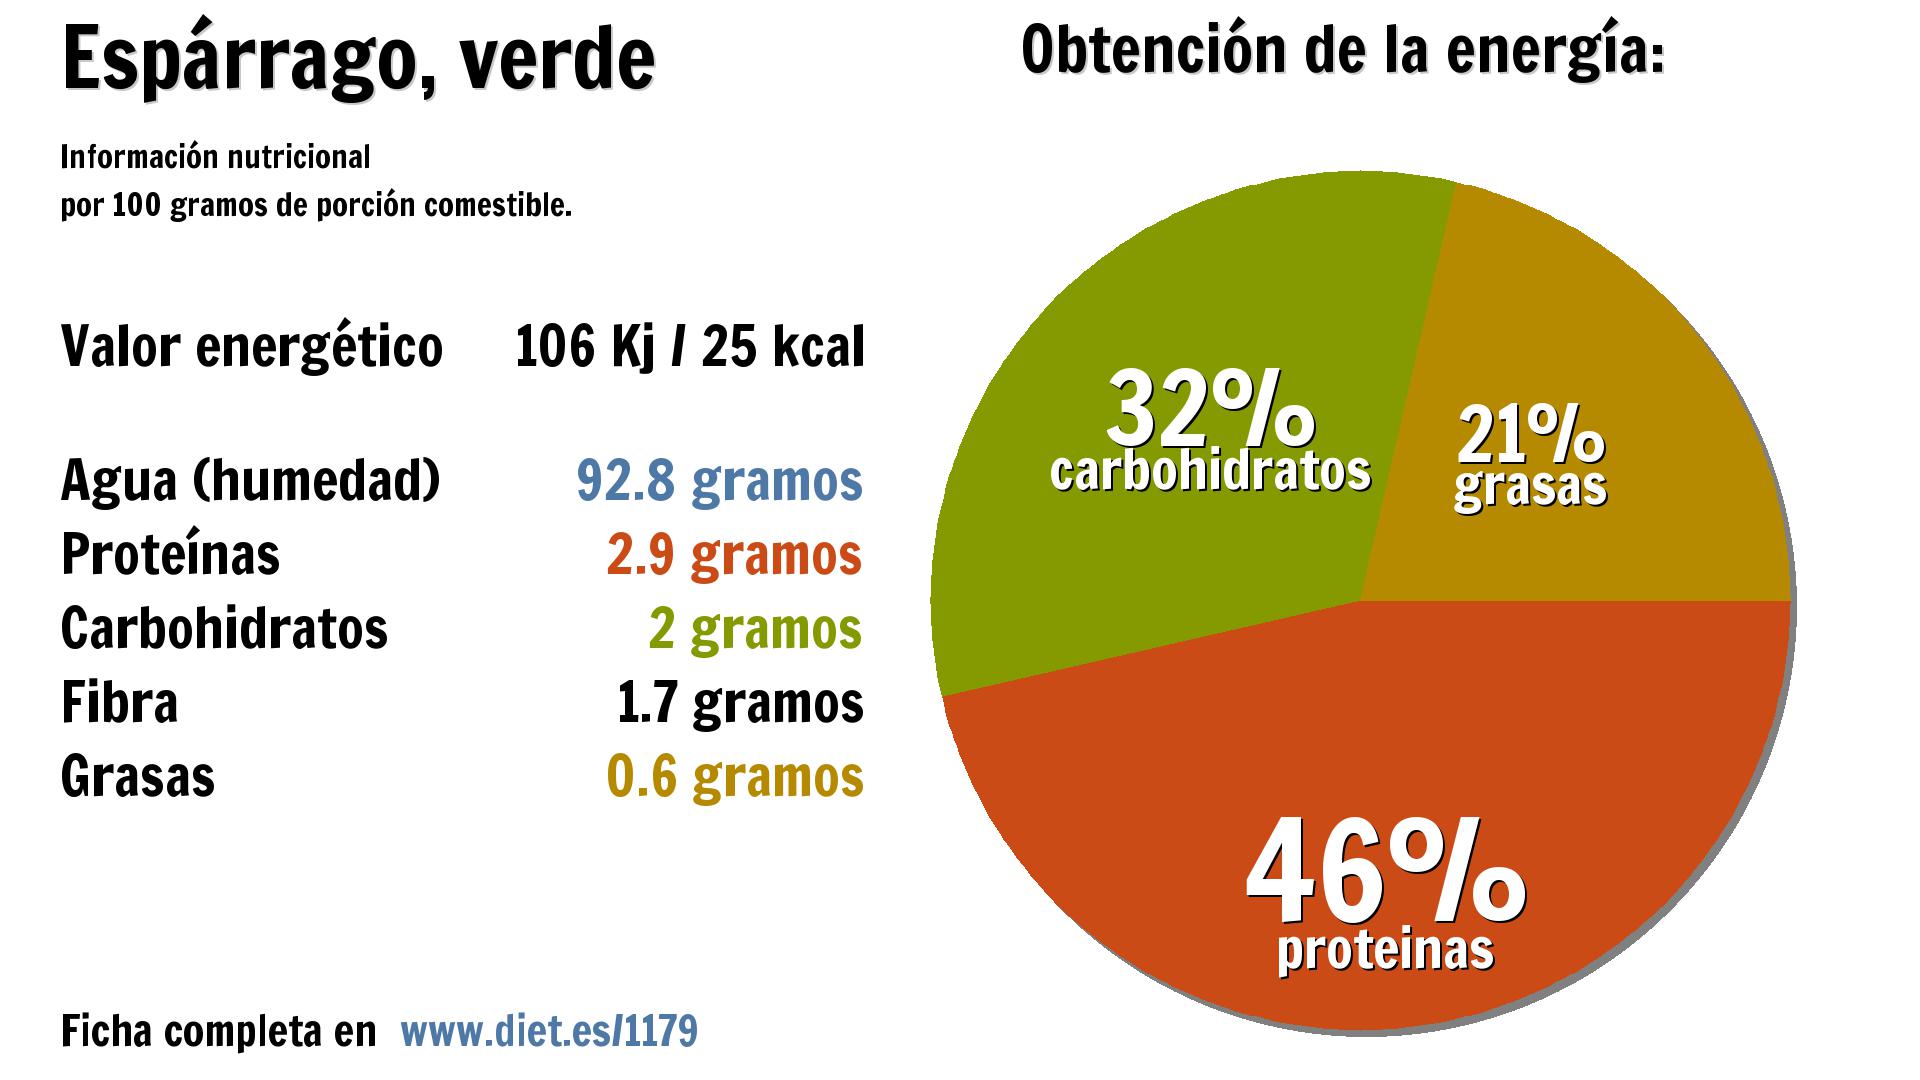 Espárrago, verde: energía 106 Kj, agua 93 g., proteínas 3 g., carbohidratos 2 g., fibra 2 g. y grasas 1 g.